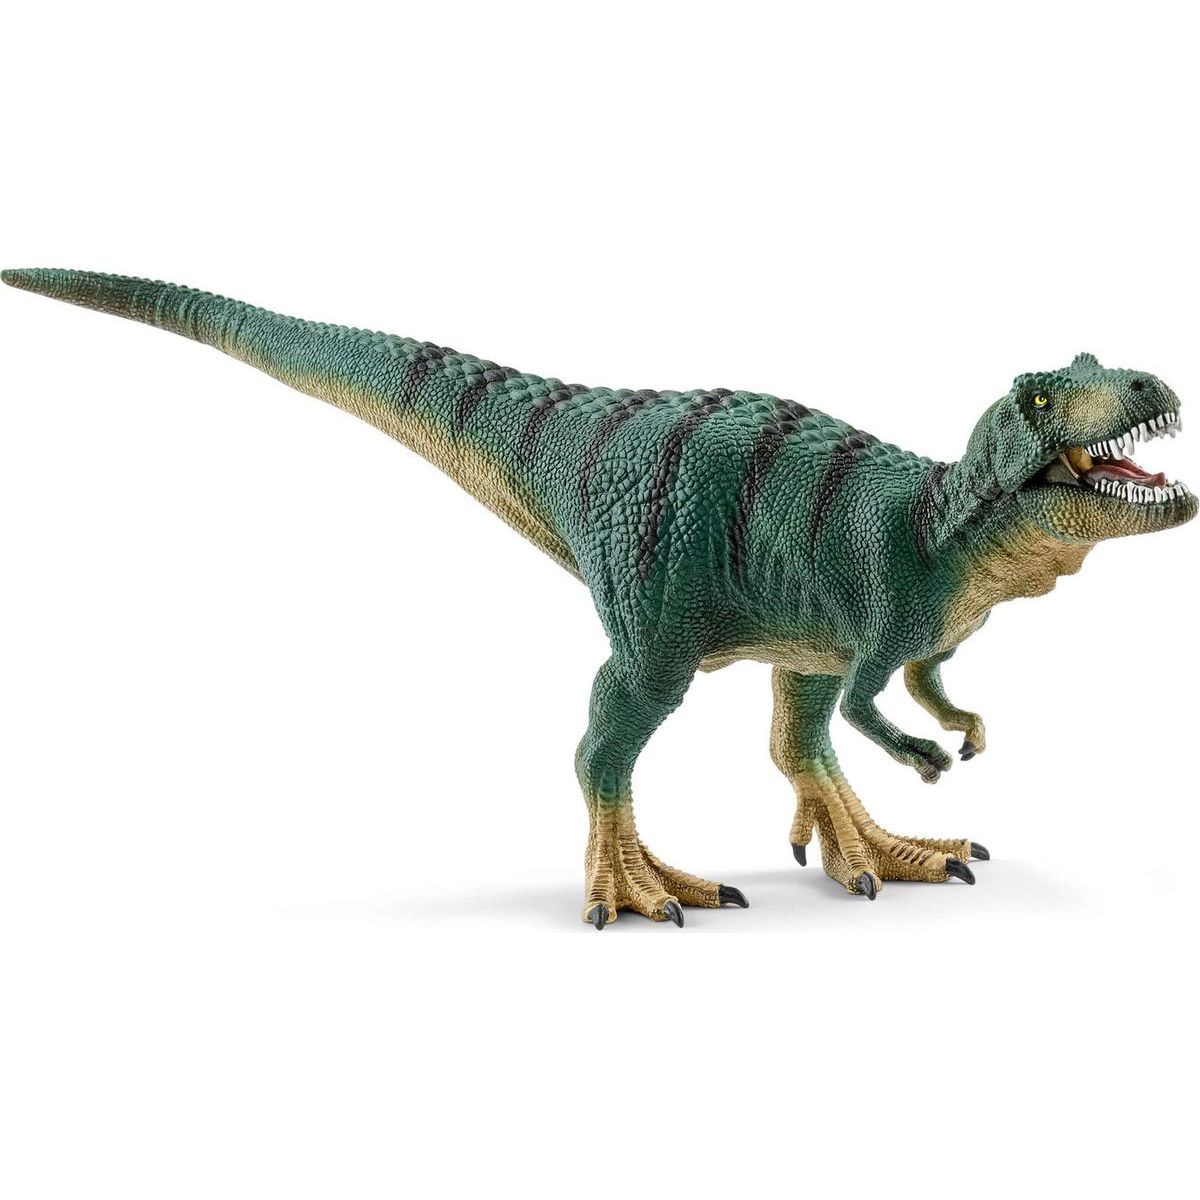 Schleich 15007 Prehistorické zvířátko Tyrannosaurus Rex mládě